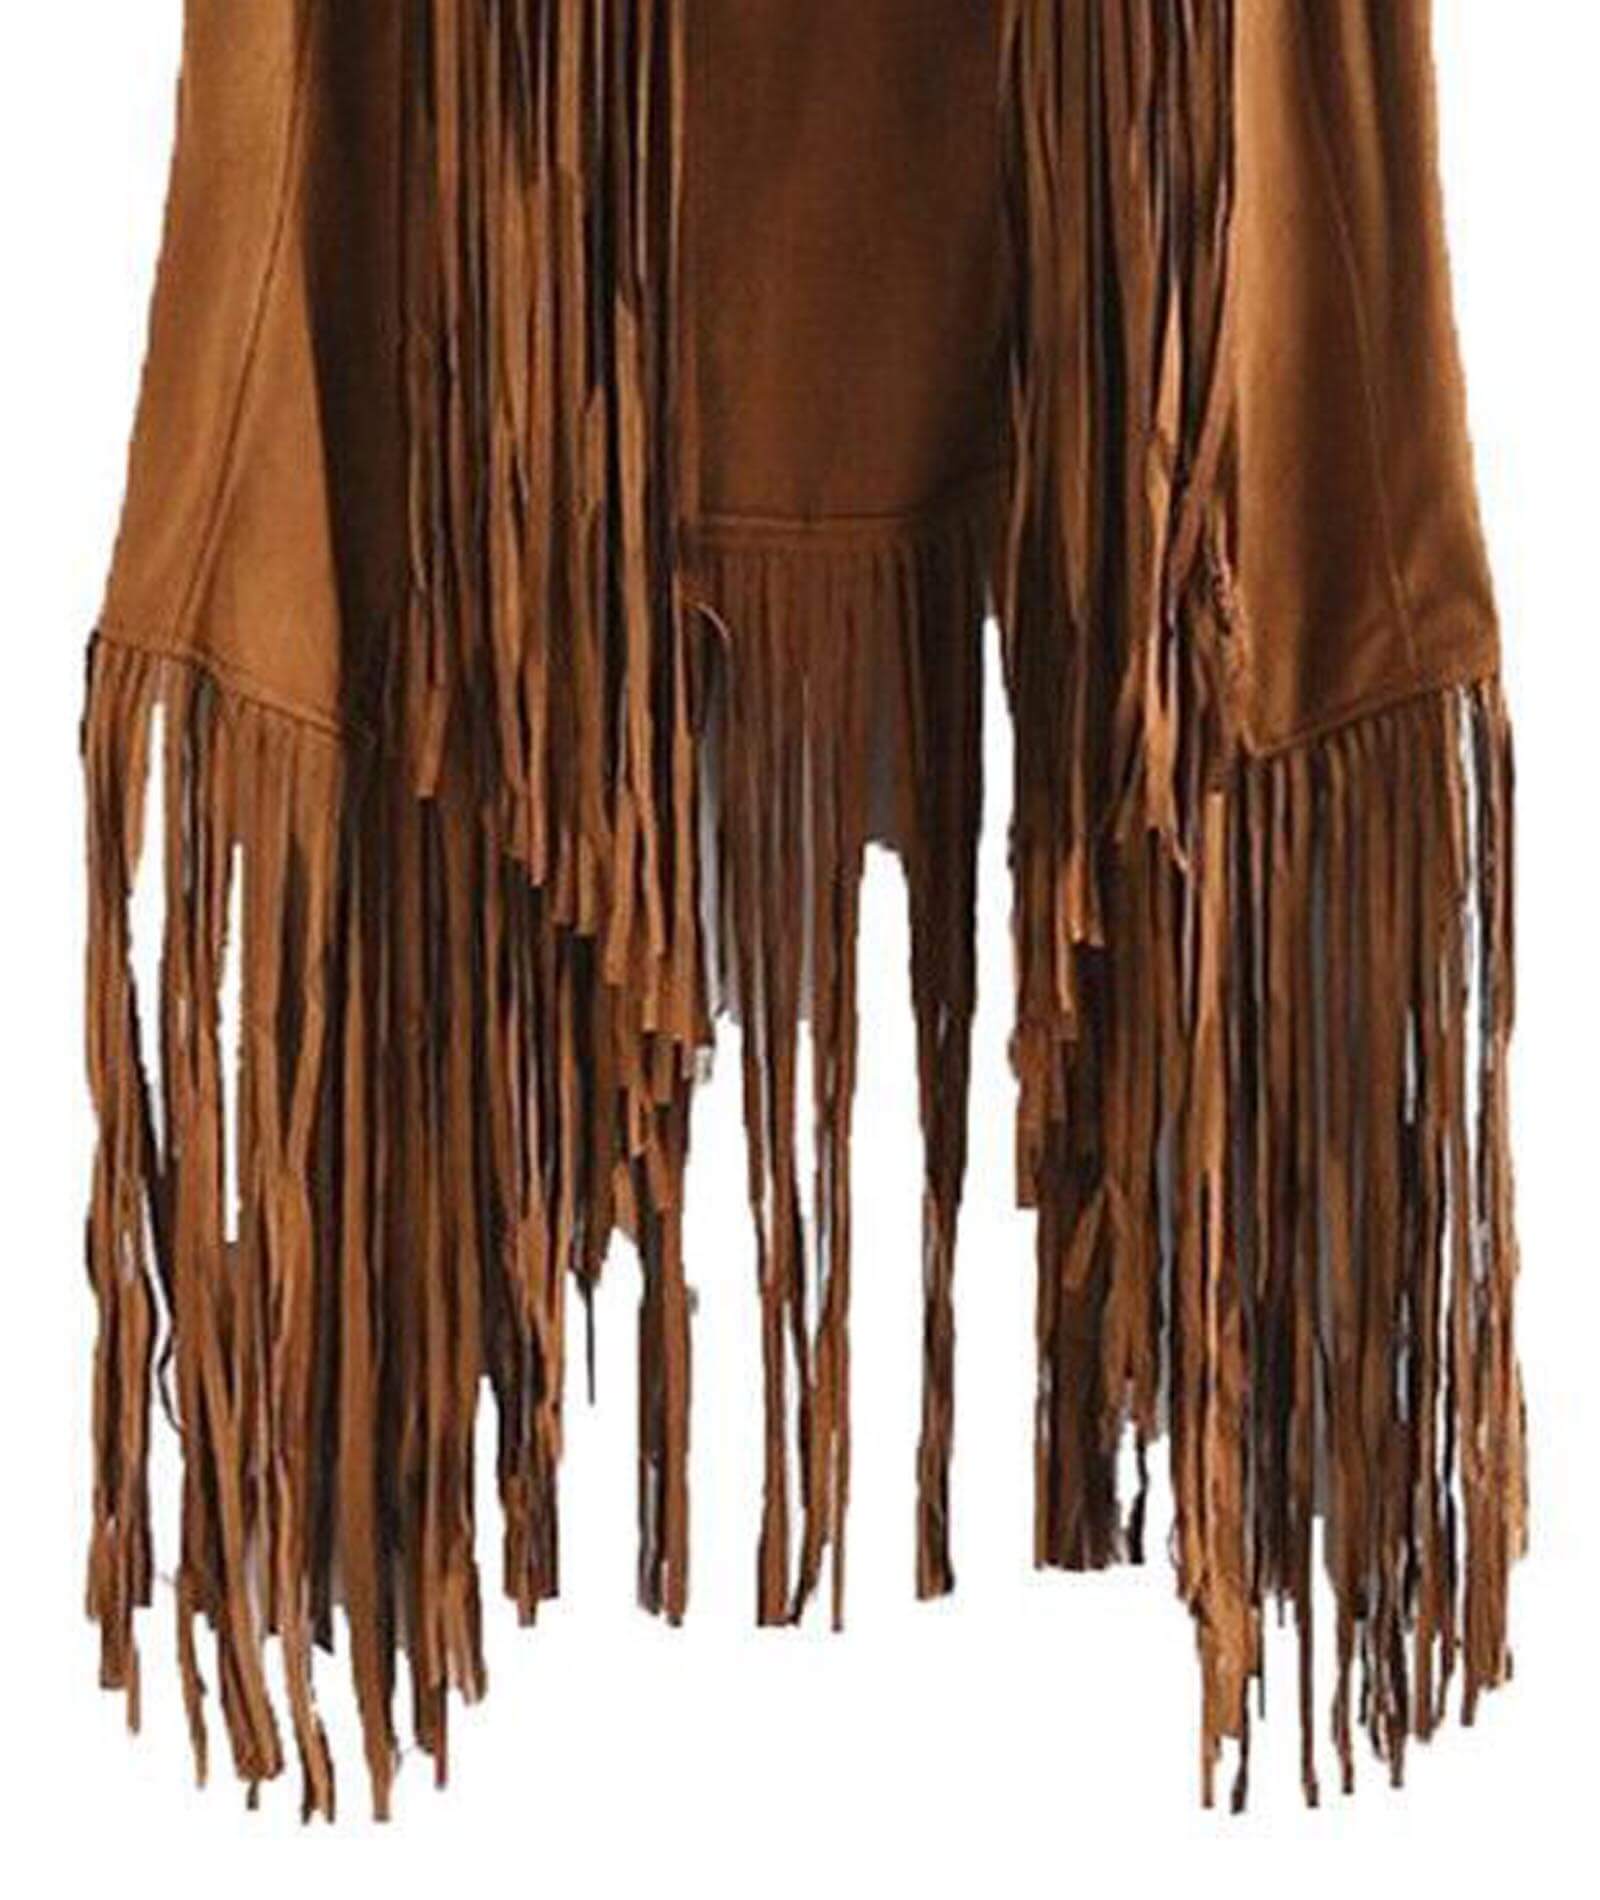  Women's Faux Suede Ethnic Cardigan Sleeveless Open Front Tassels Fringed Vest 70s Hippie Vintage Western Jackets